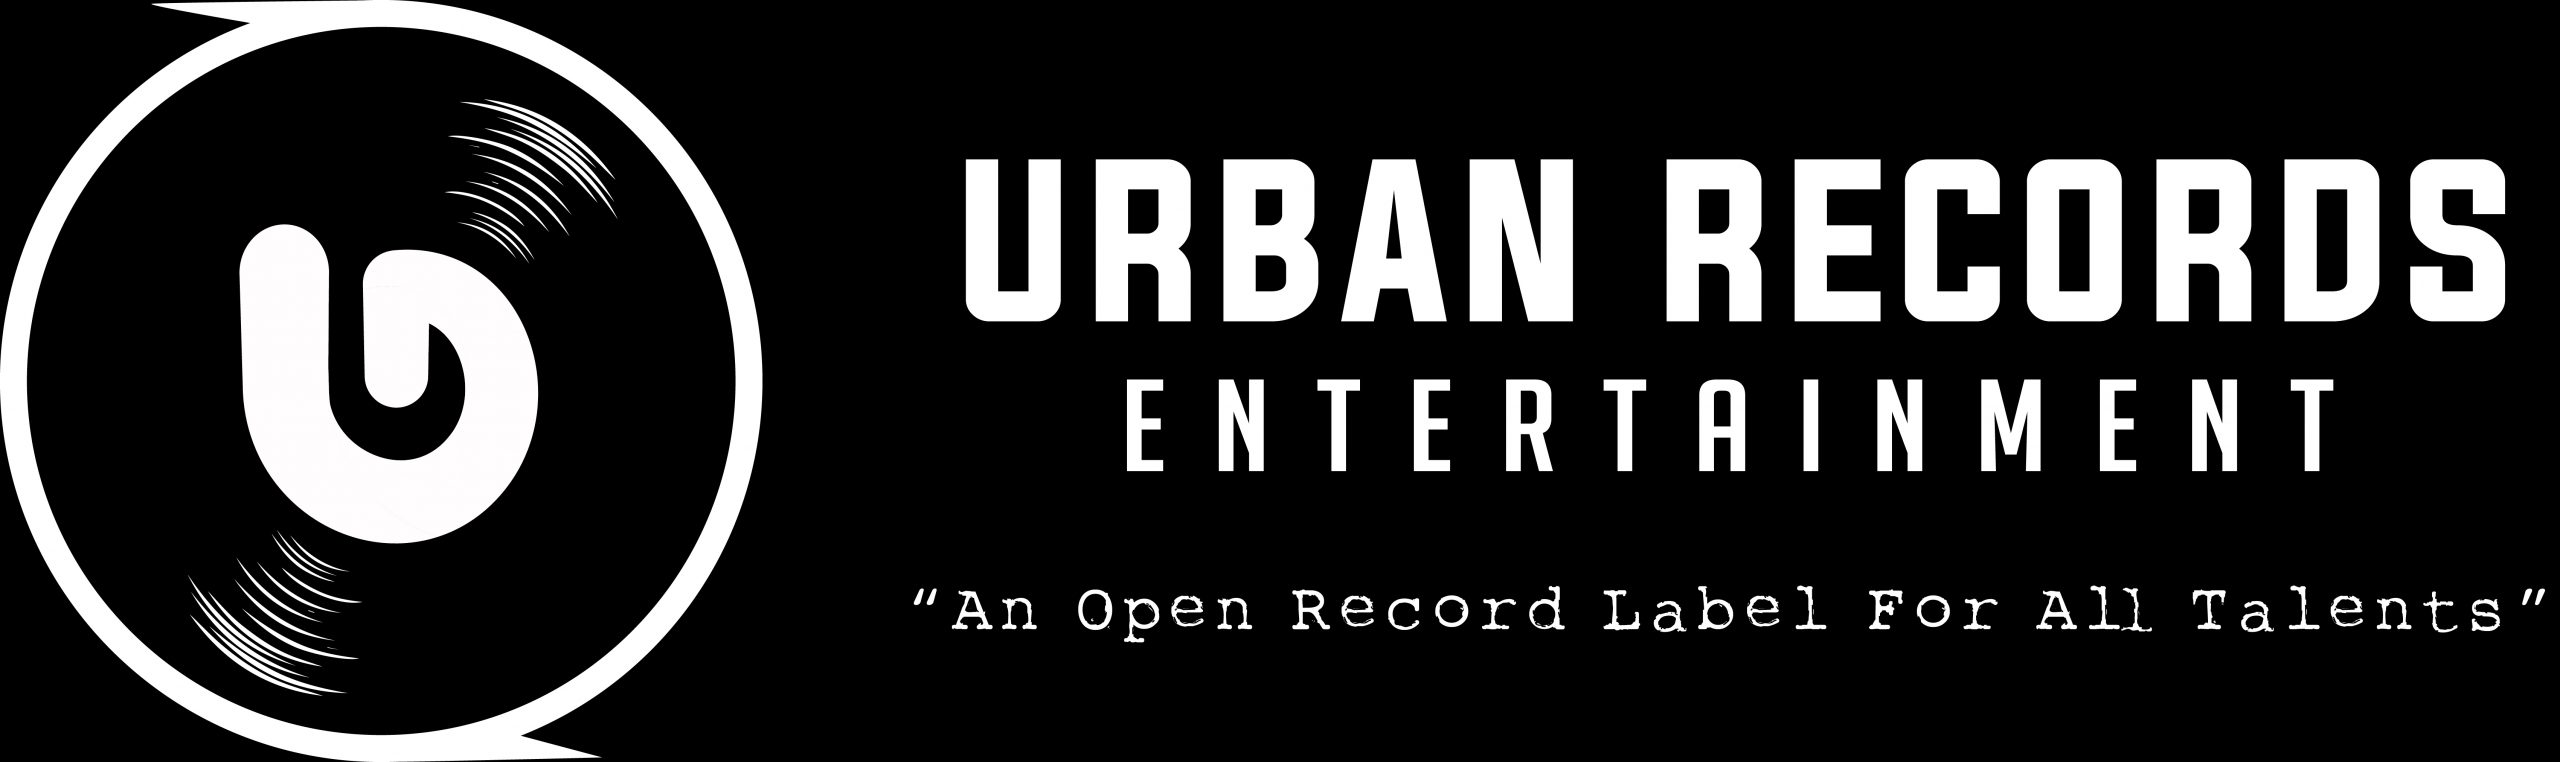 Urban Records Entertainment